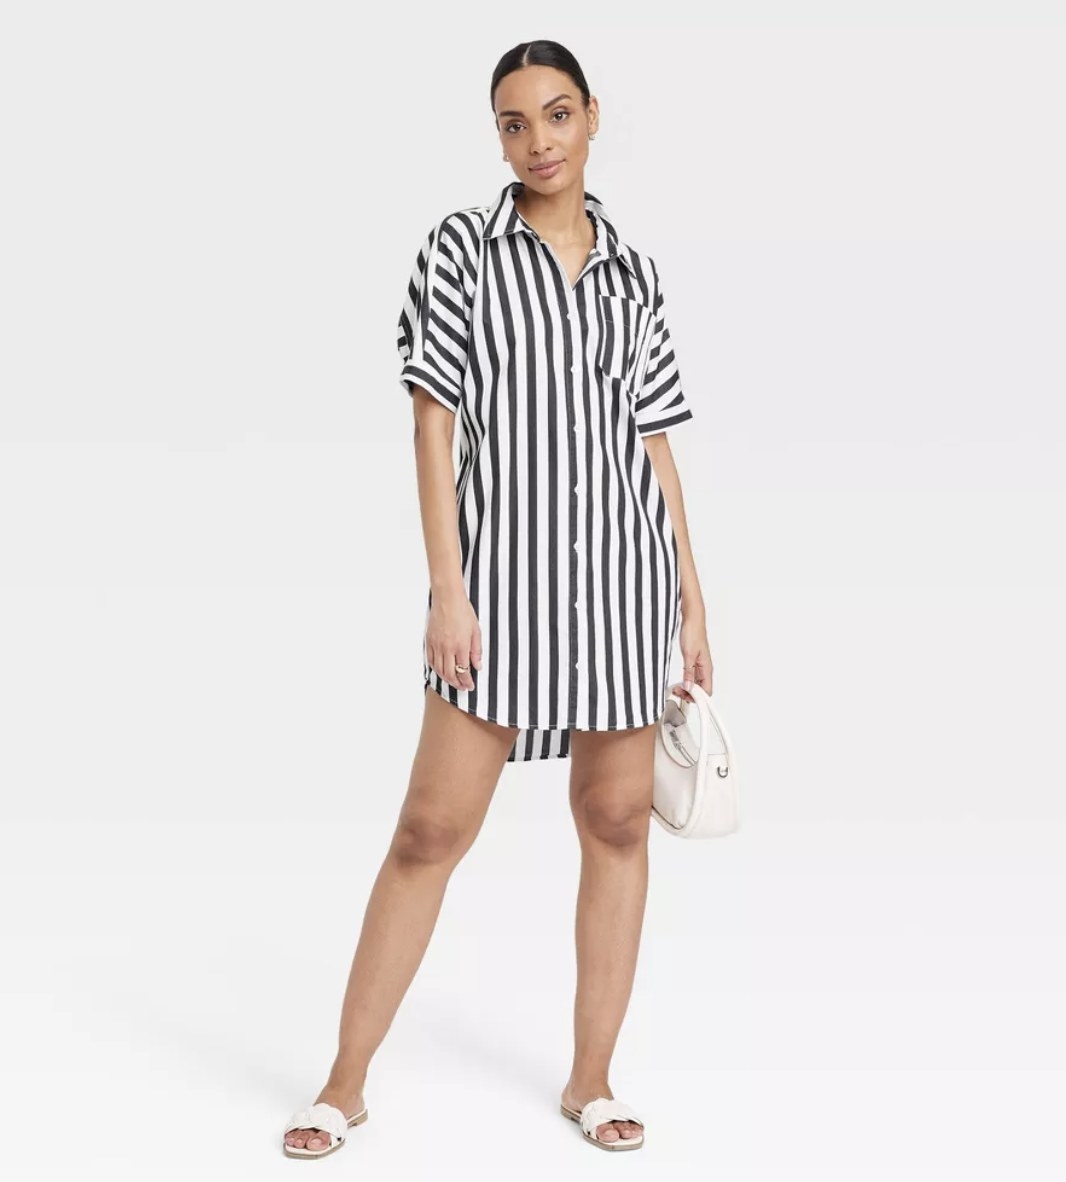 A striped shirtdress